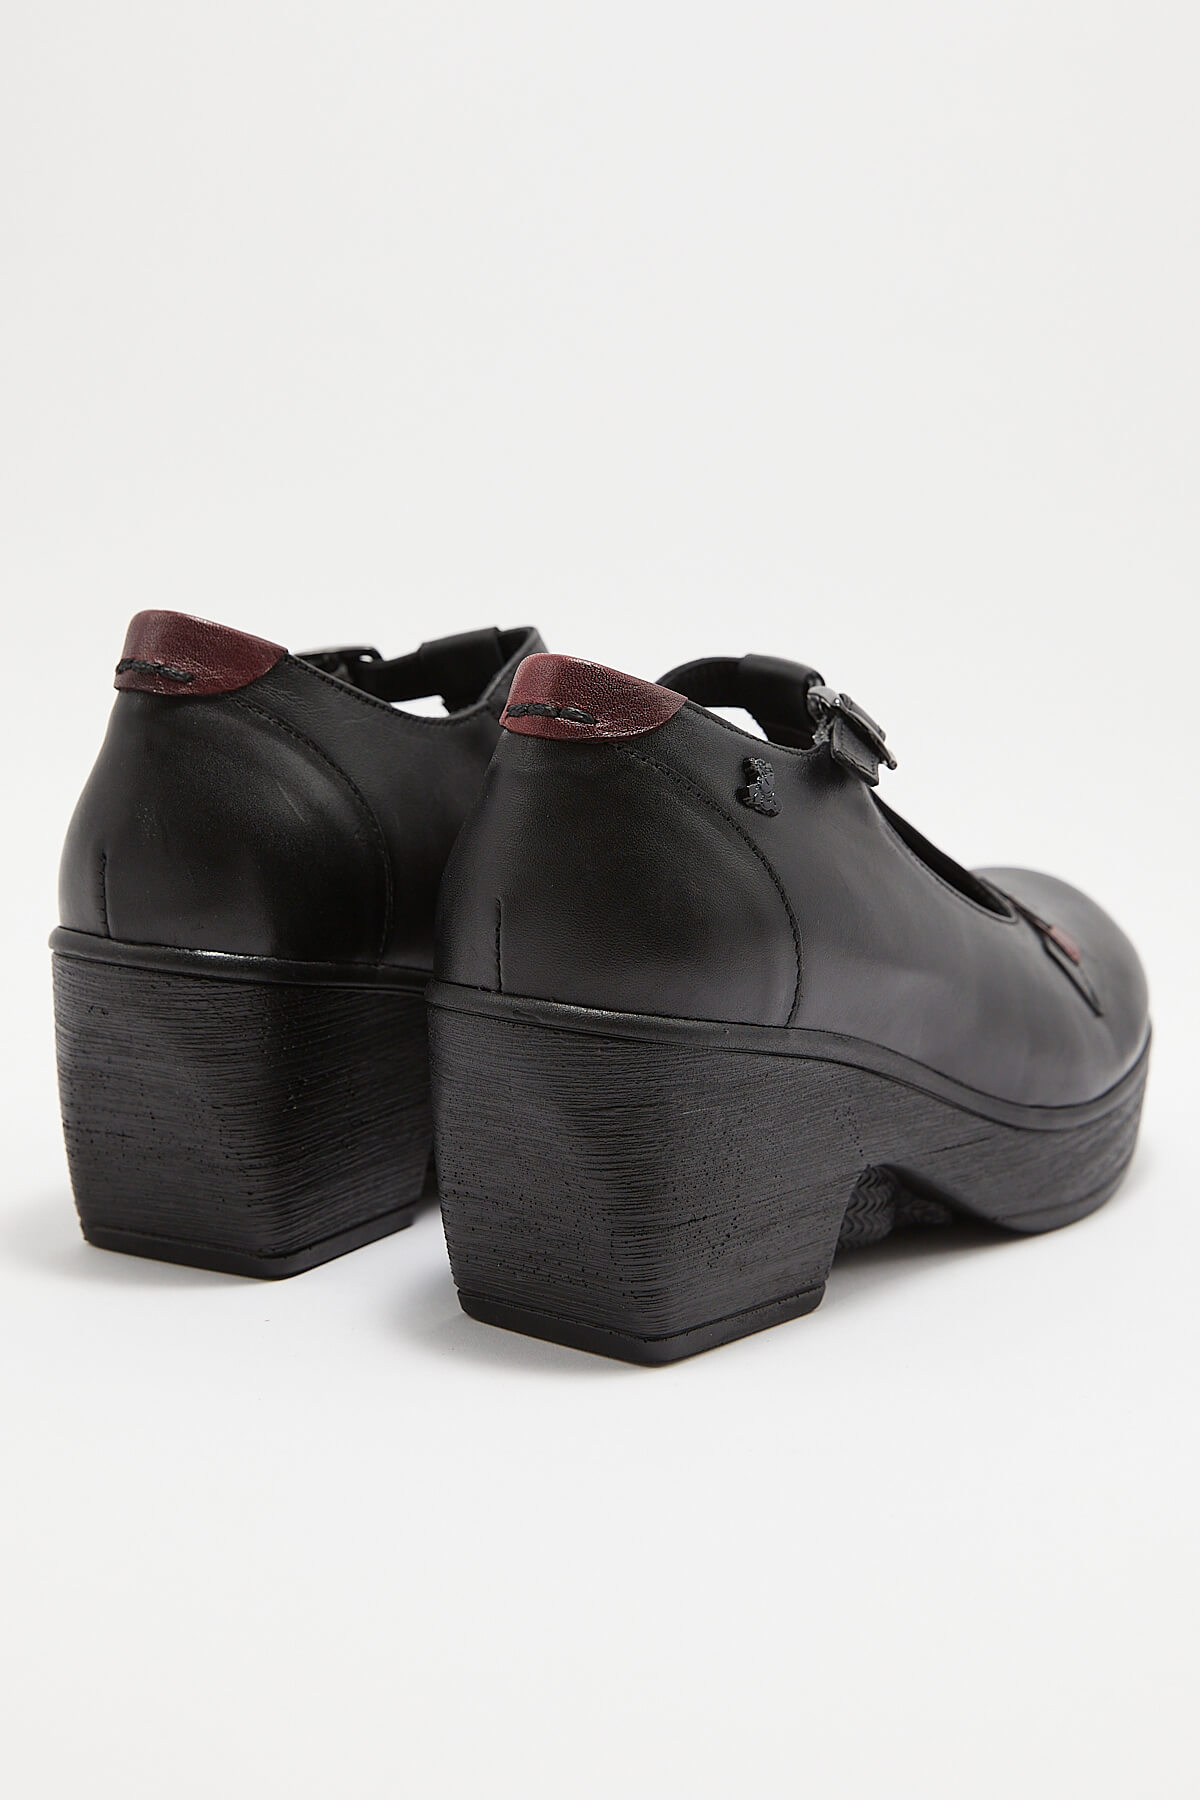 Kadın Apartman Topuk Deri Ayakkabı Siyah 1912511Y - Thumbnail